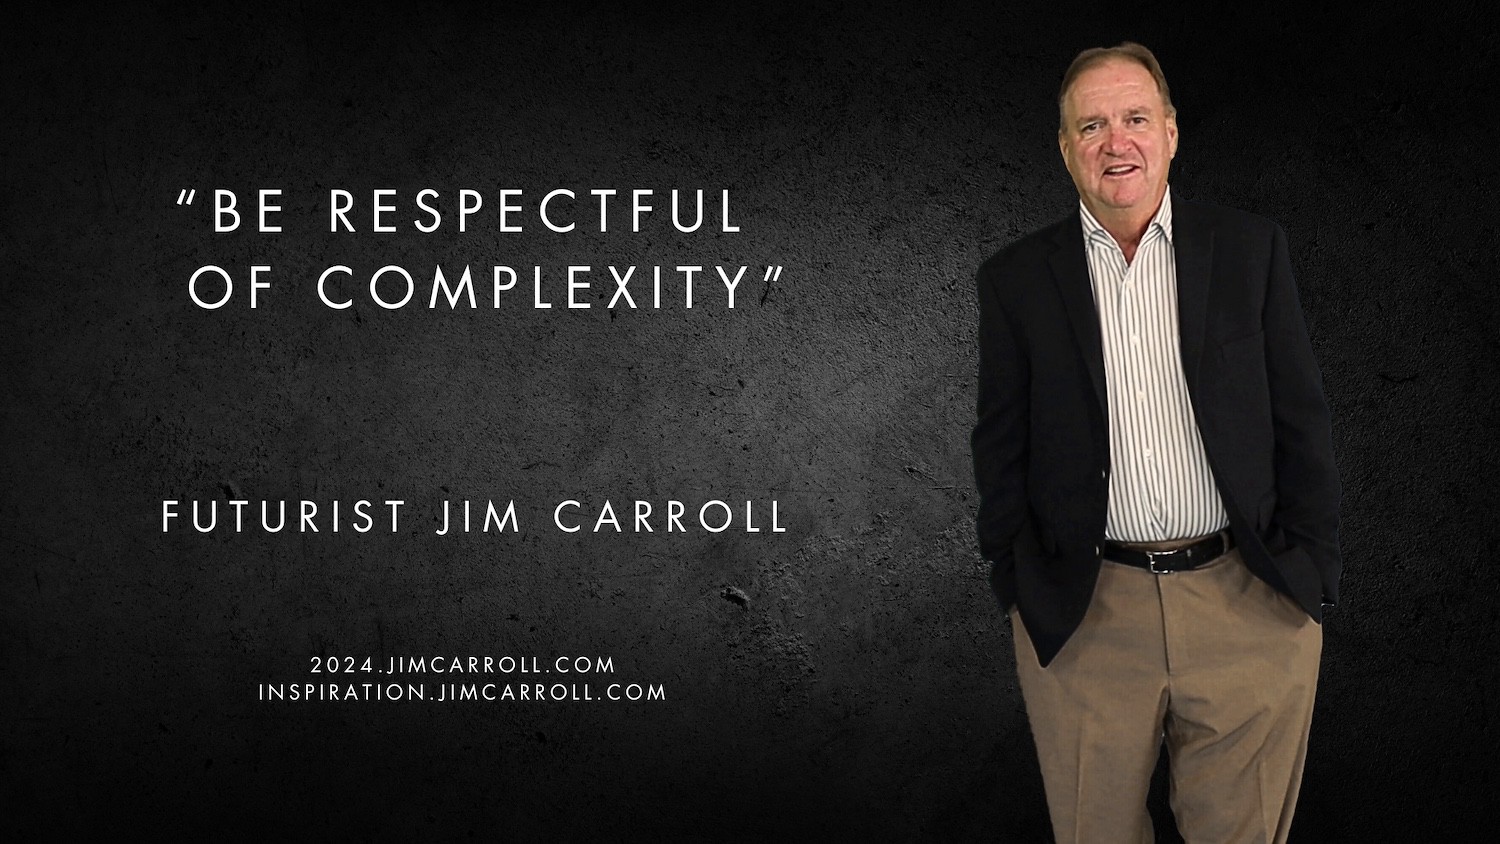 "Be respectful of complexity" - Futurist Jim Carroll